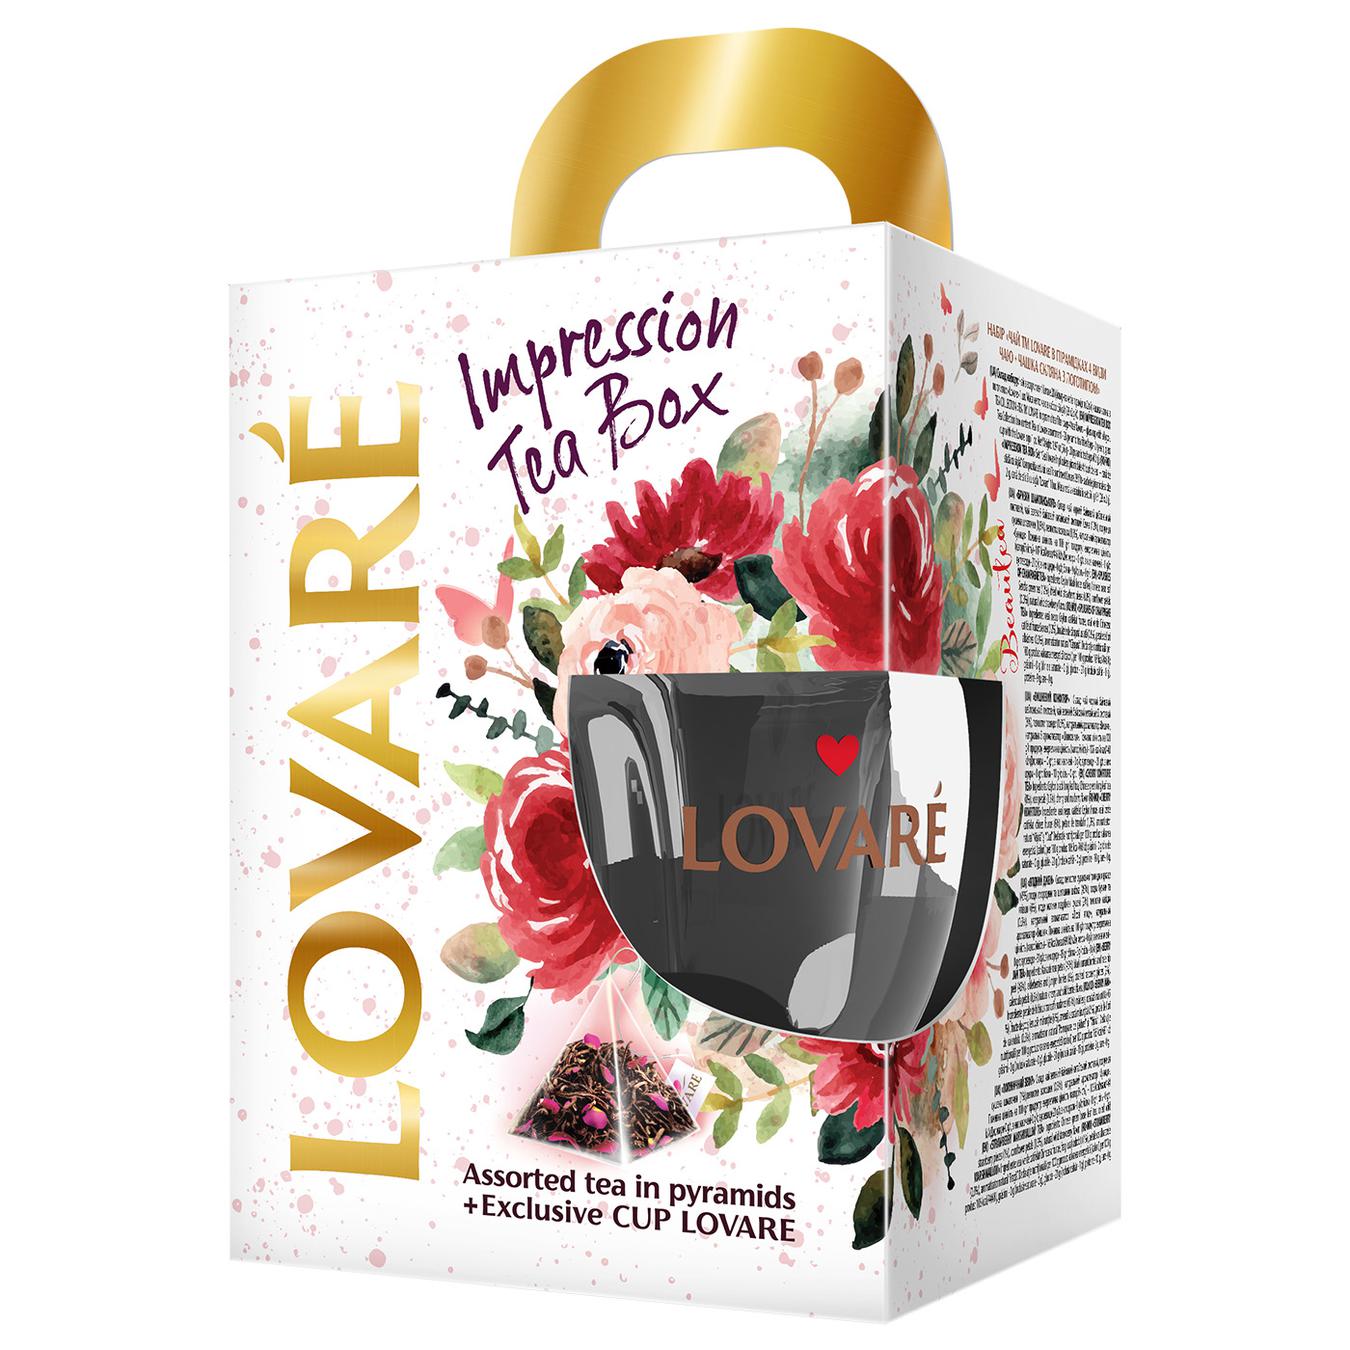 Набор Коллекция чаев LOVARE Impression tea box 4 вида пирамидок по 7шт + чашка с логотипом 56г